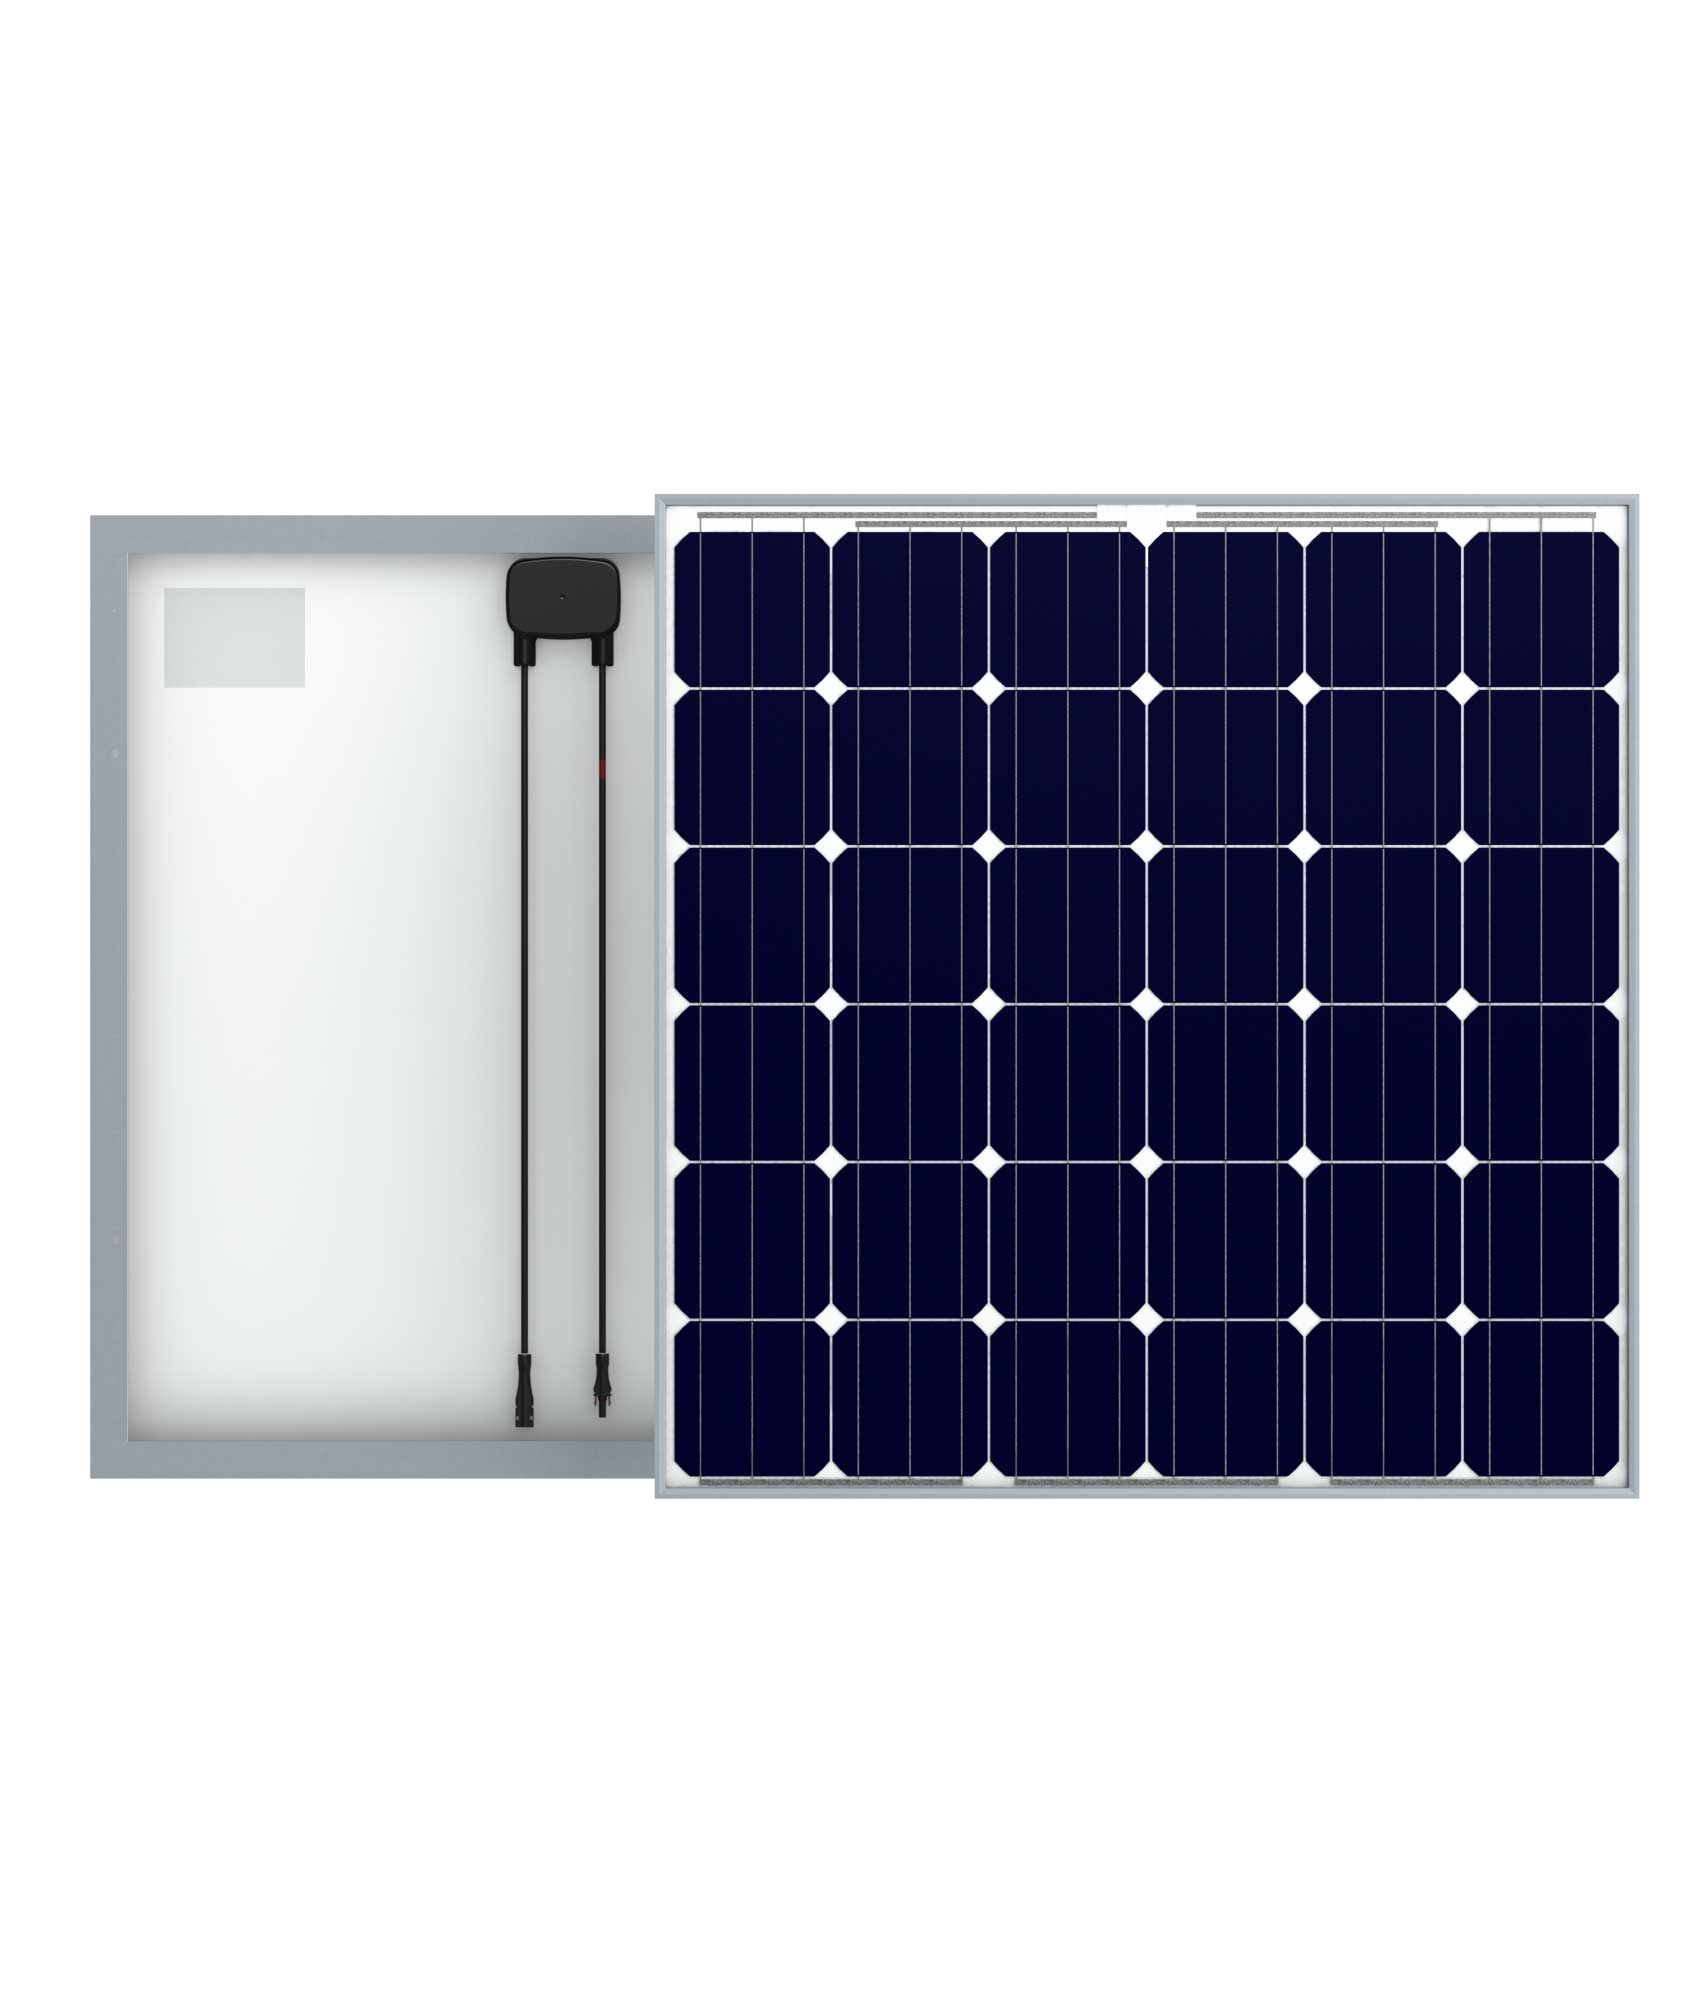 Solar photovoltaic module RZMP 36-150-M3W20